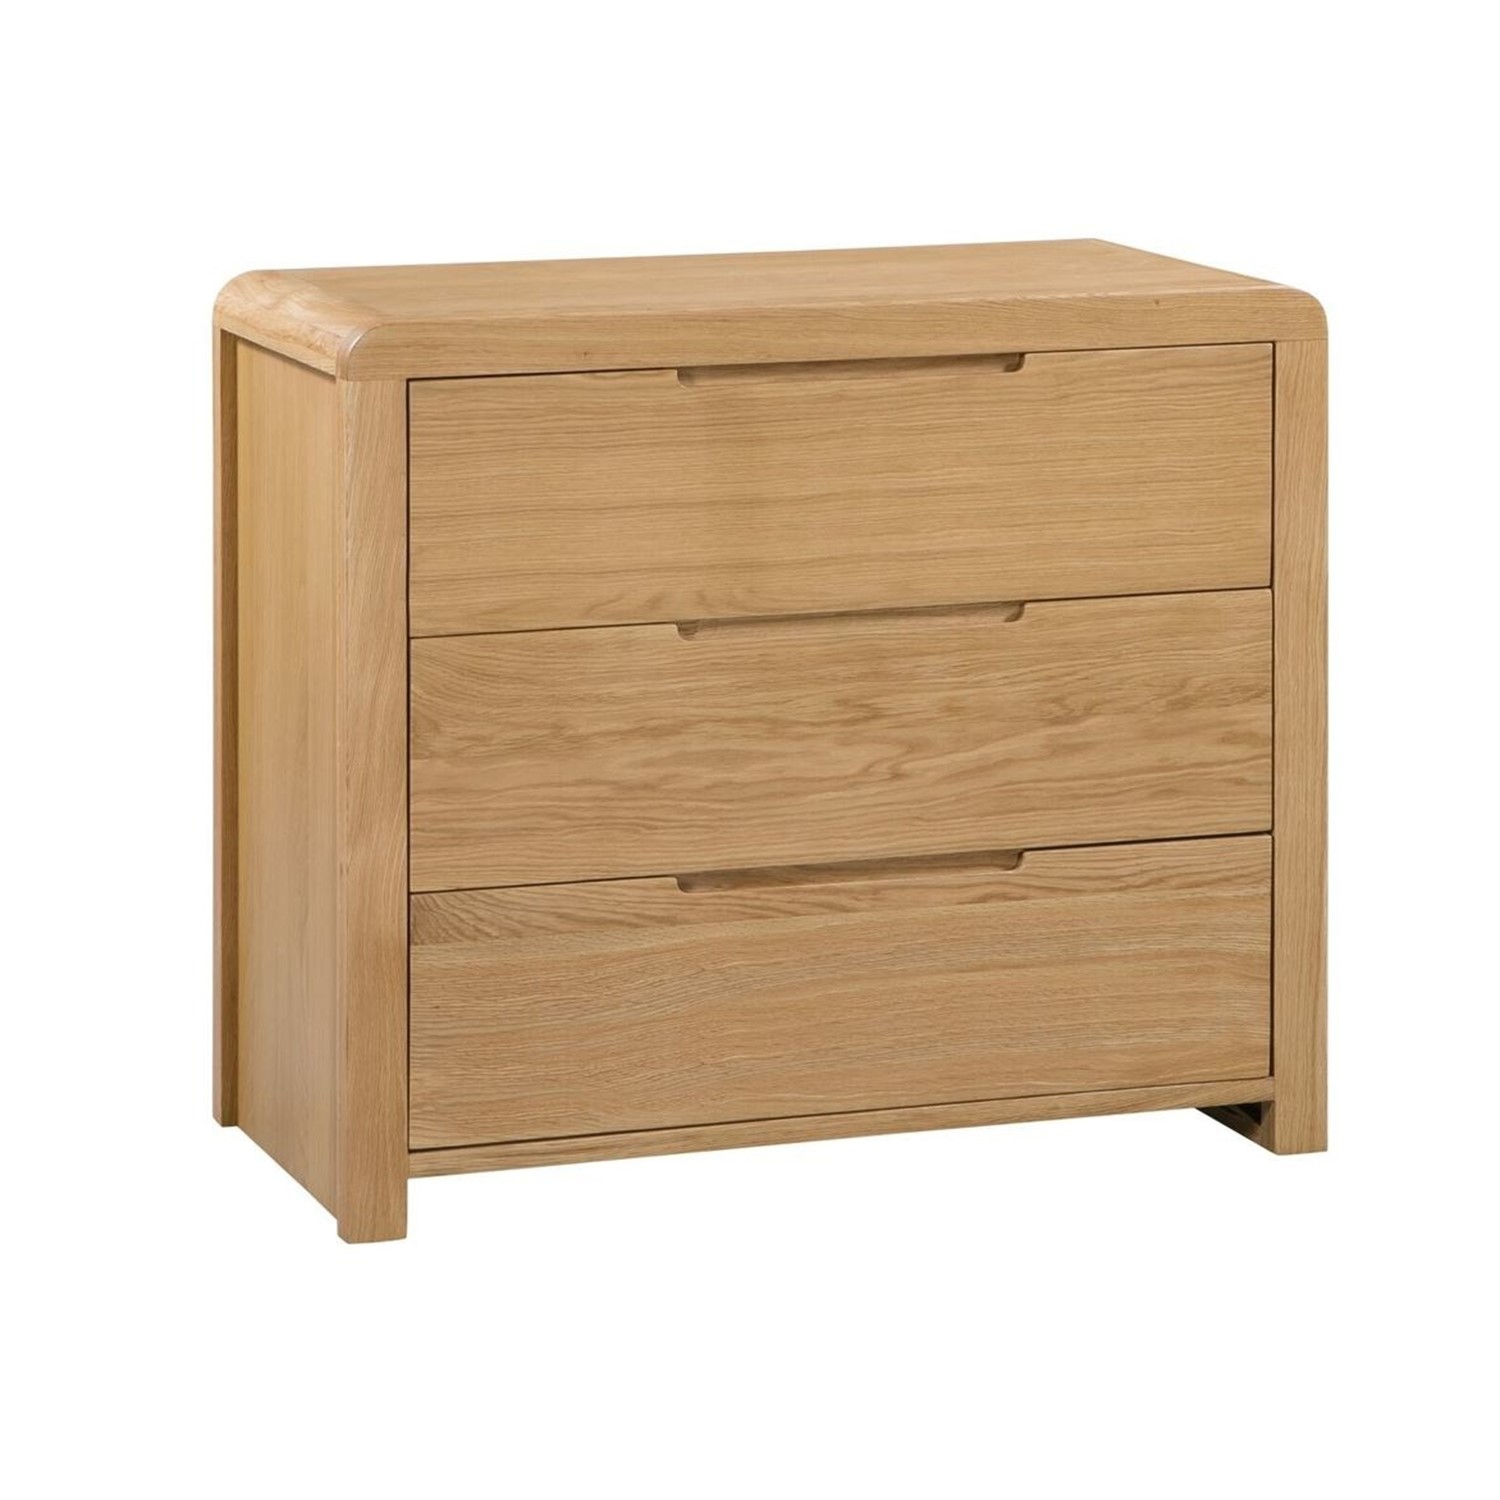 Photo of Curved oak modern chest of 3 drawers - julian bowen